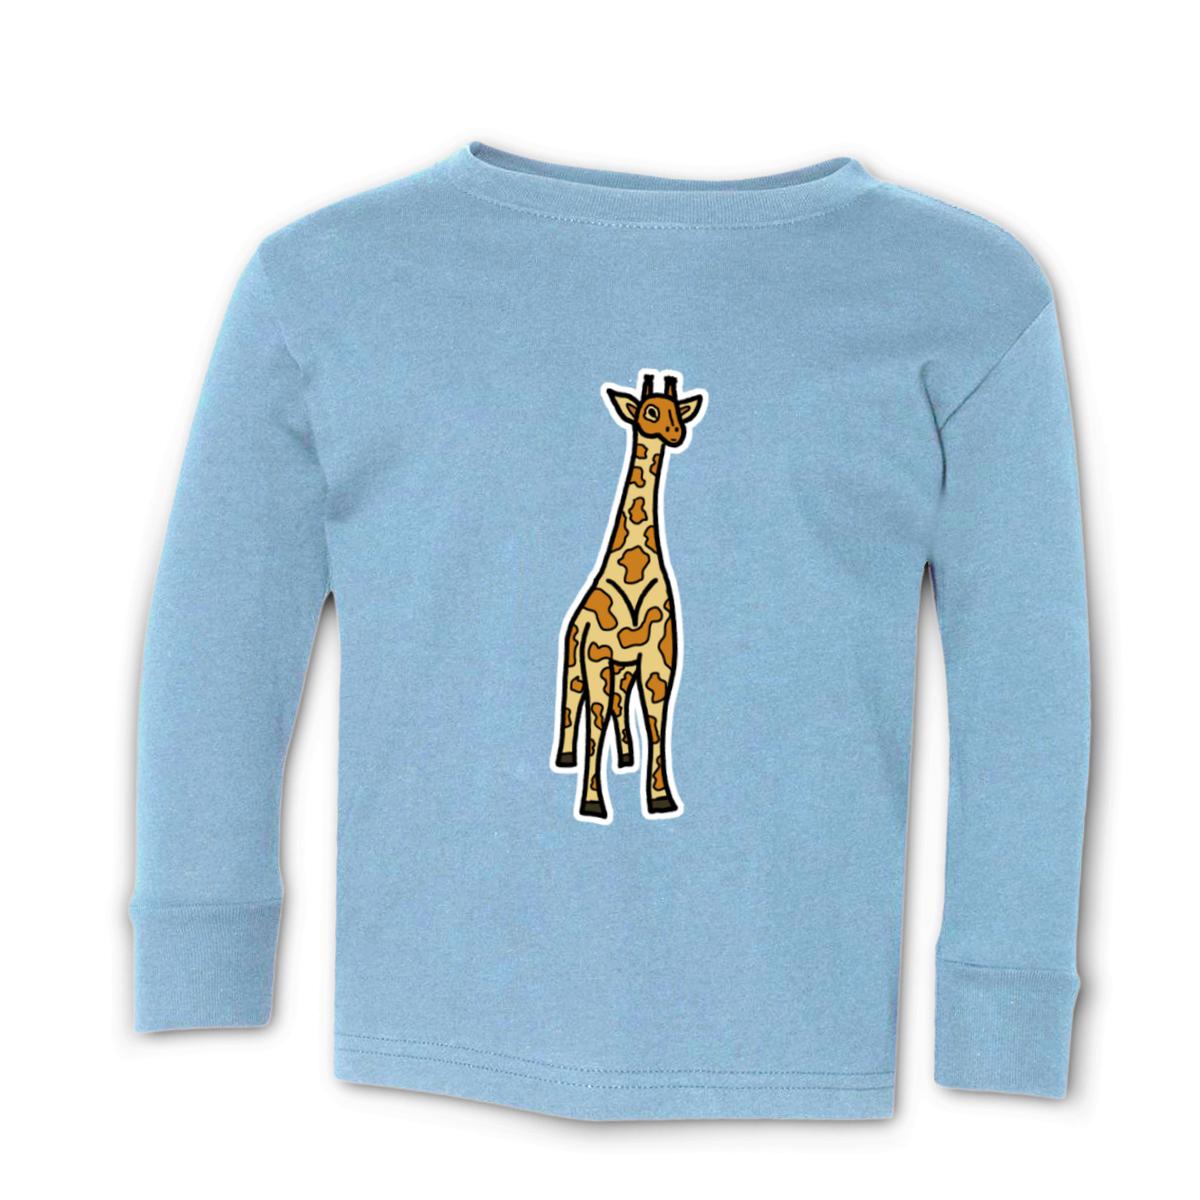 Toy Giraffe Toddler Long Sleeve Tee 56T light-blue